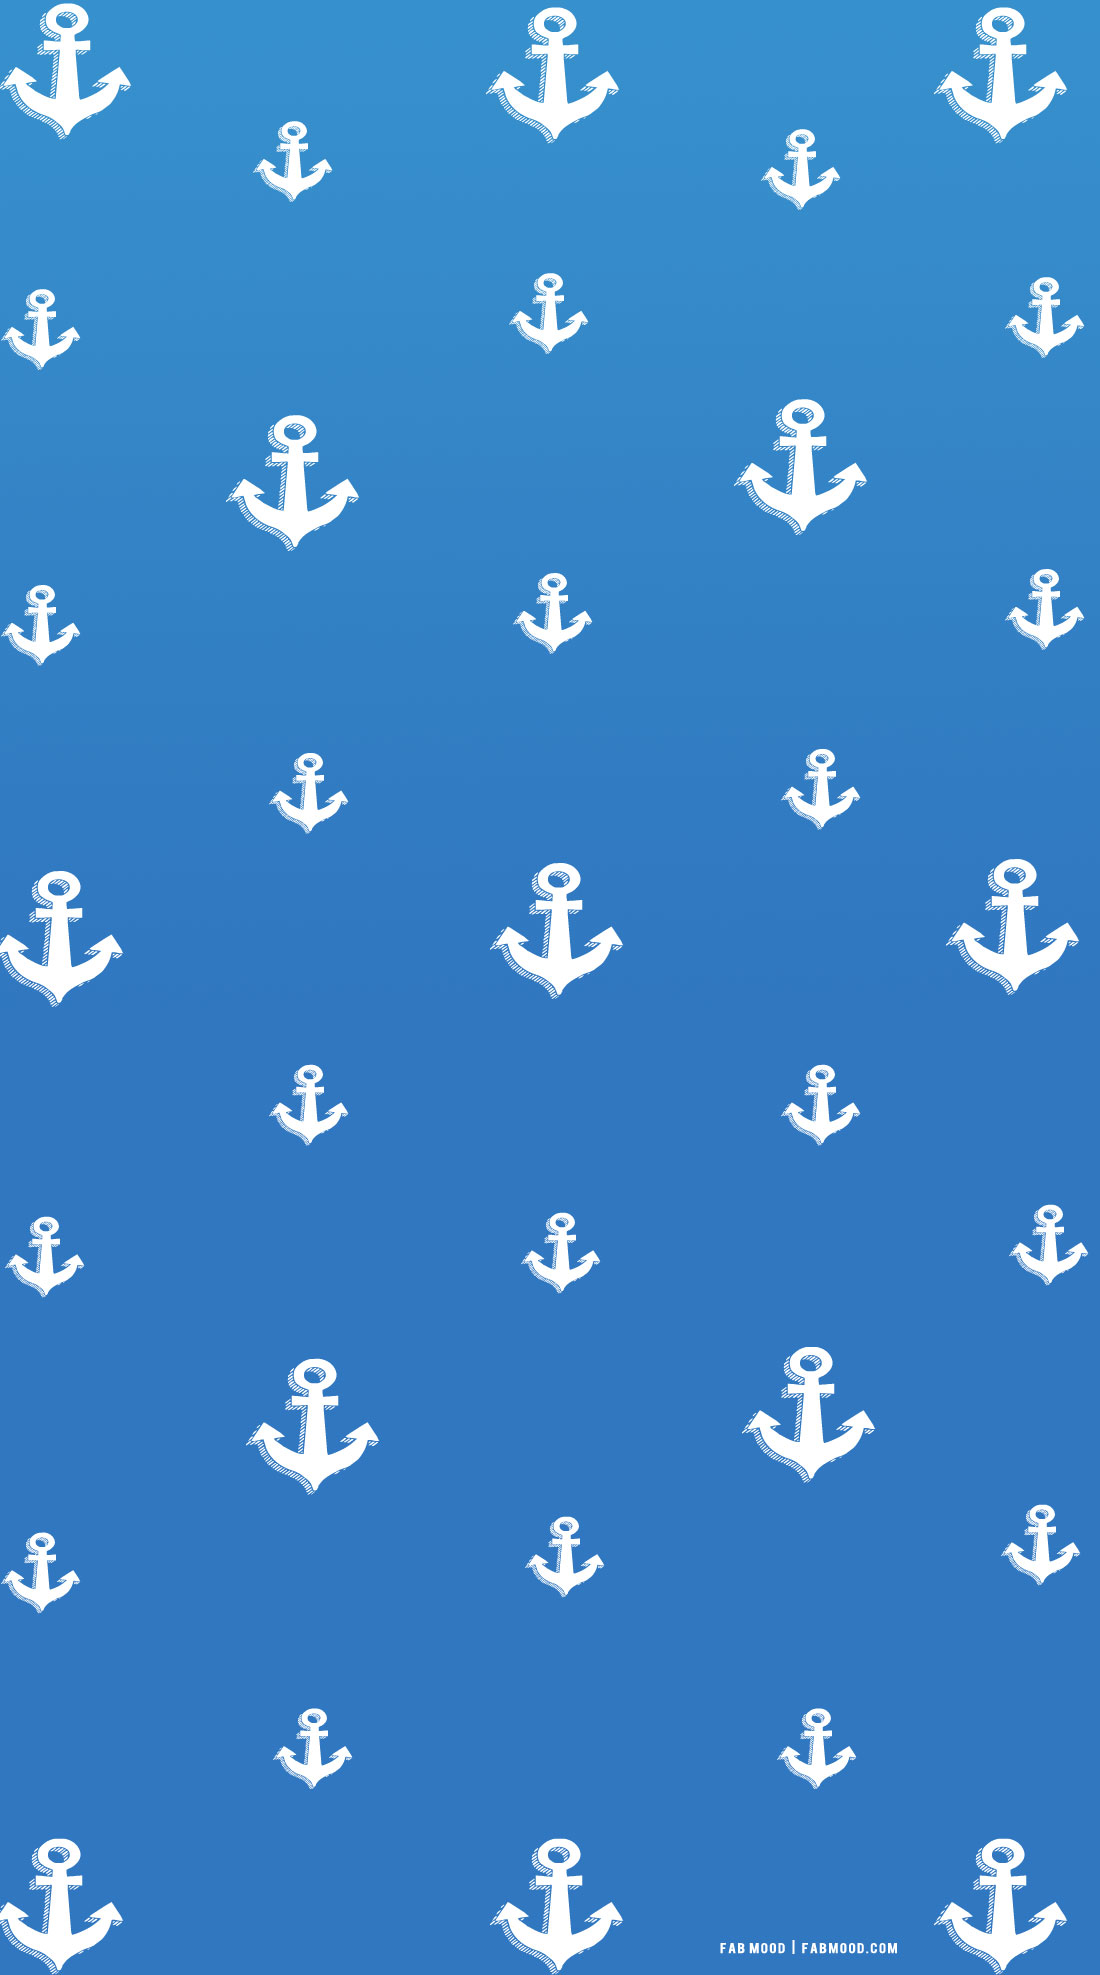 iphone 5 anchor wallpaper